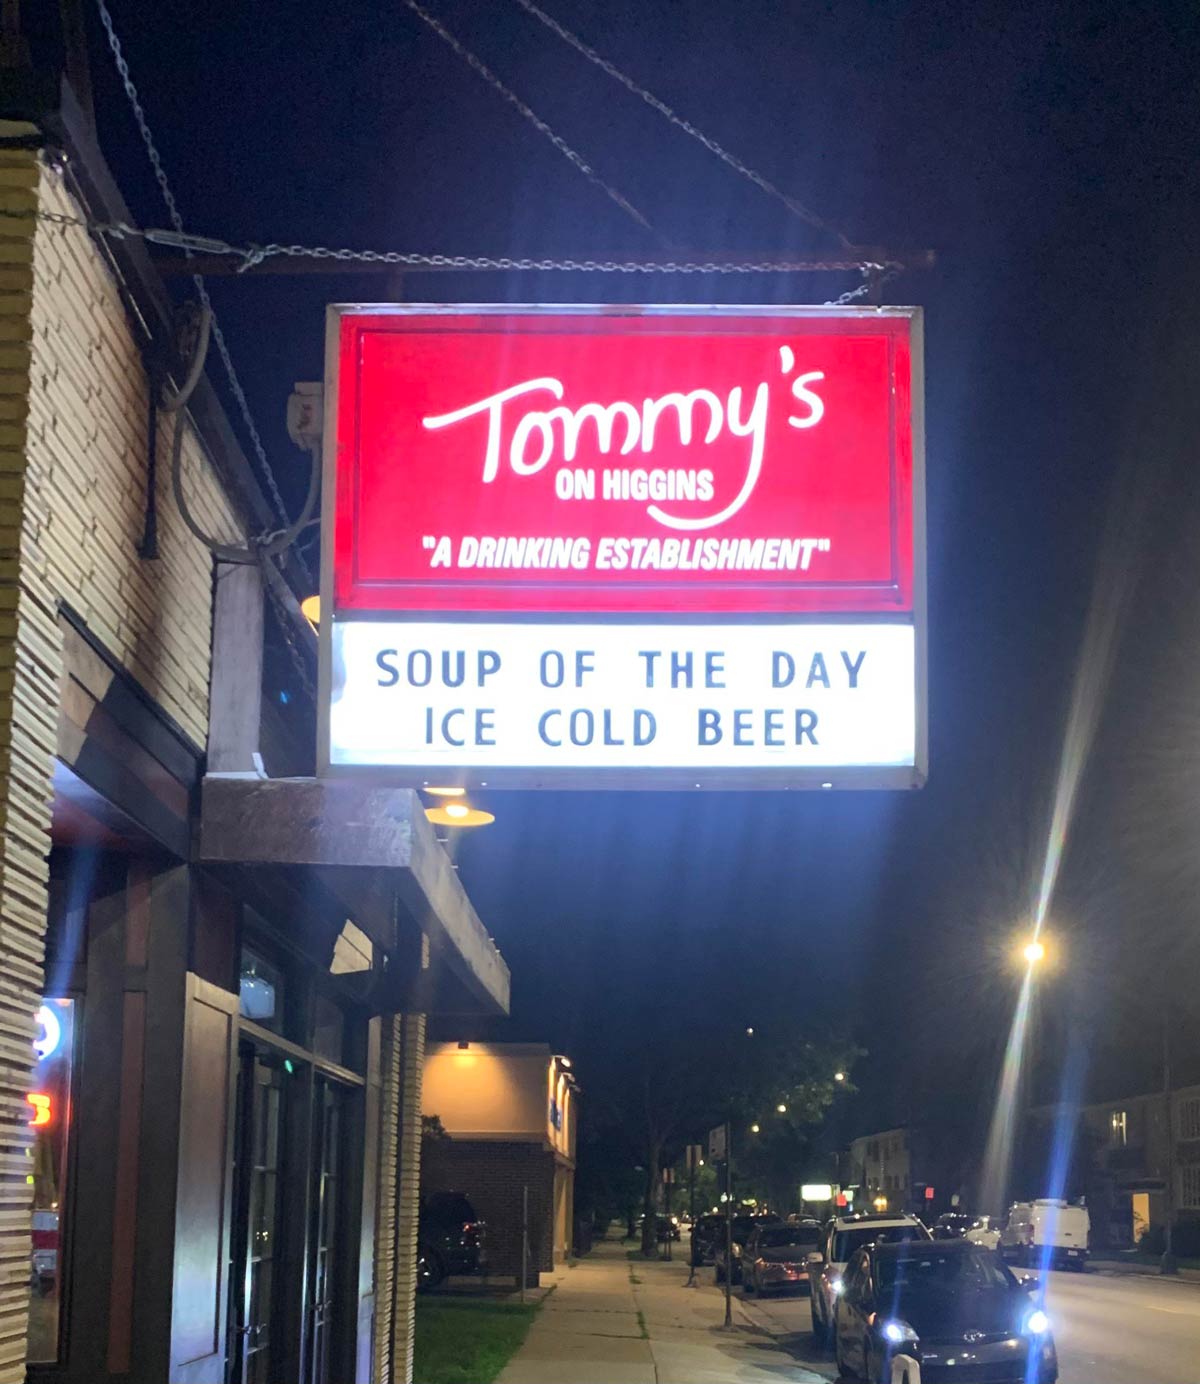 Mmmm, soup